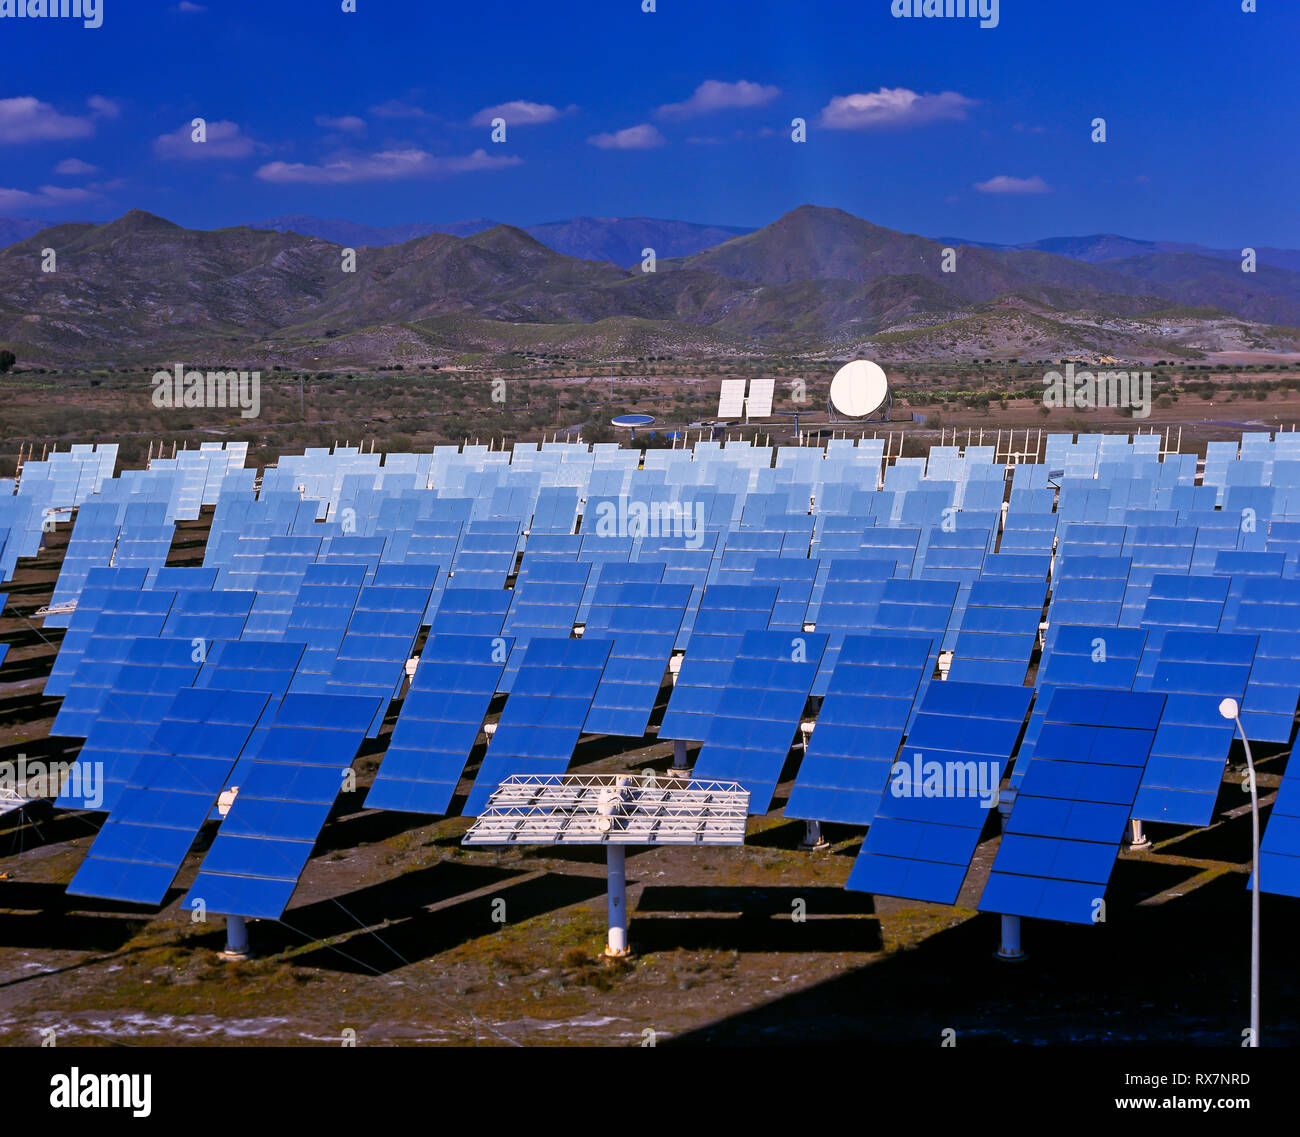 Planta de energía solar, Tabernas, Almería provincia, región de Andalucía, España, Europa Foto de stock